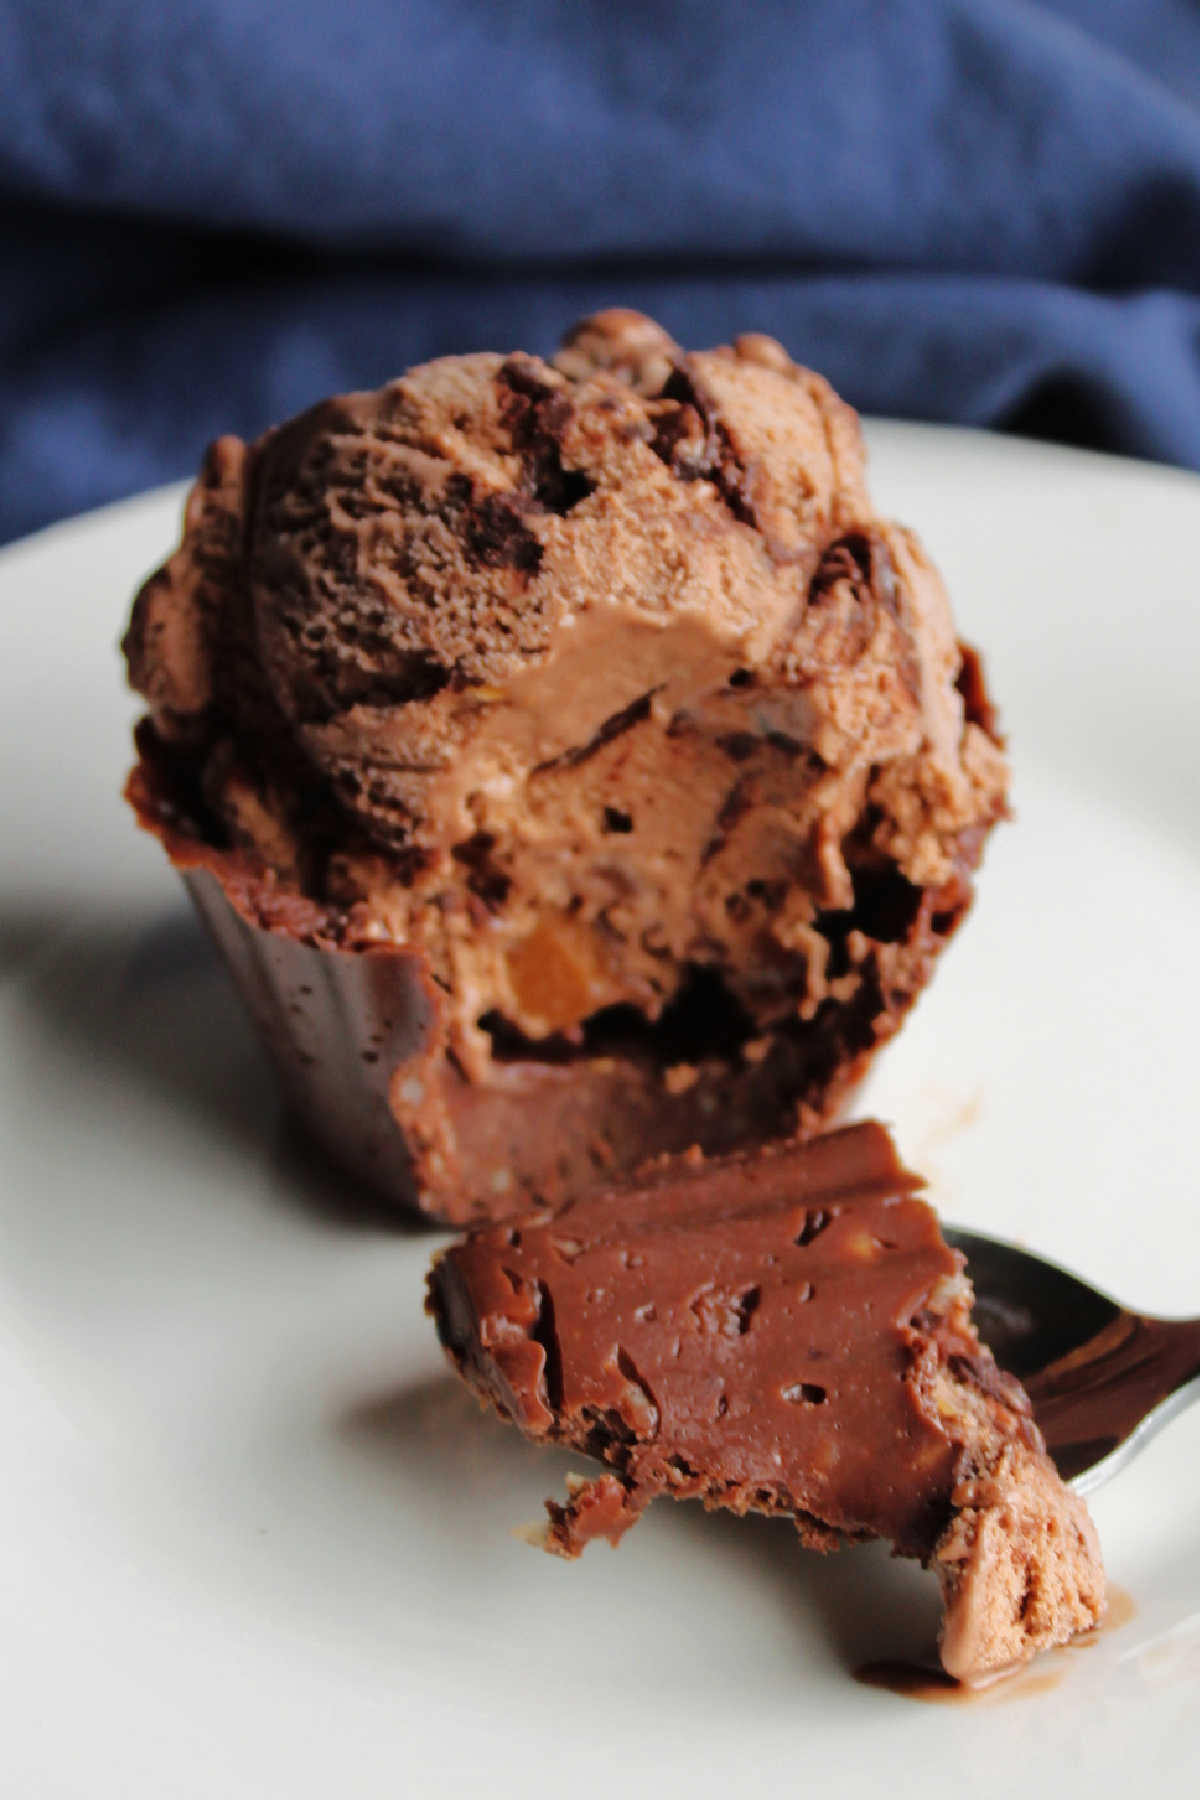 Bite of fudge ice cream cup and chocolate peanut butter ice cream on spoon.